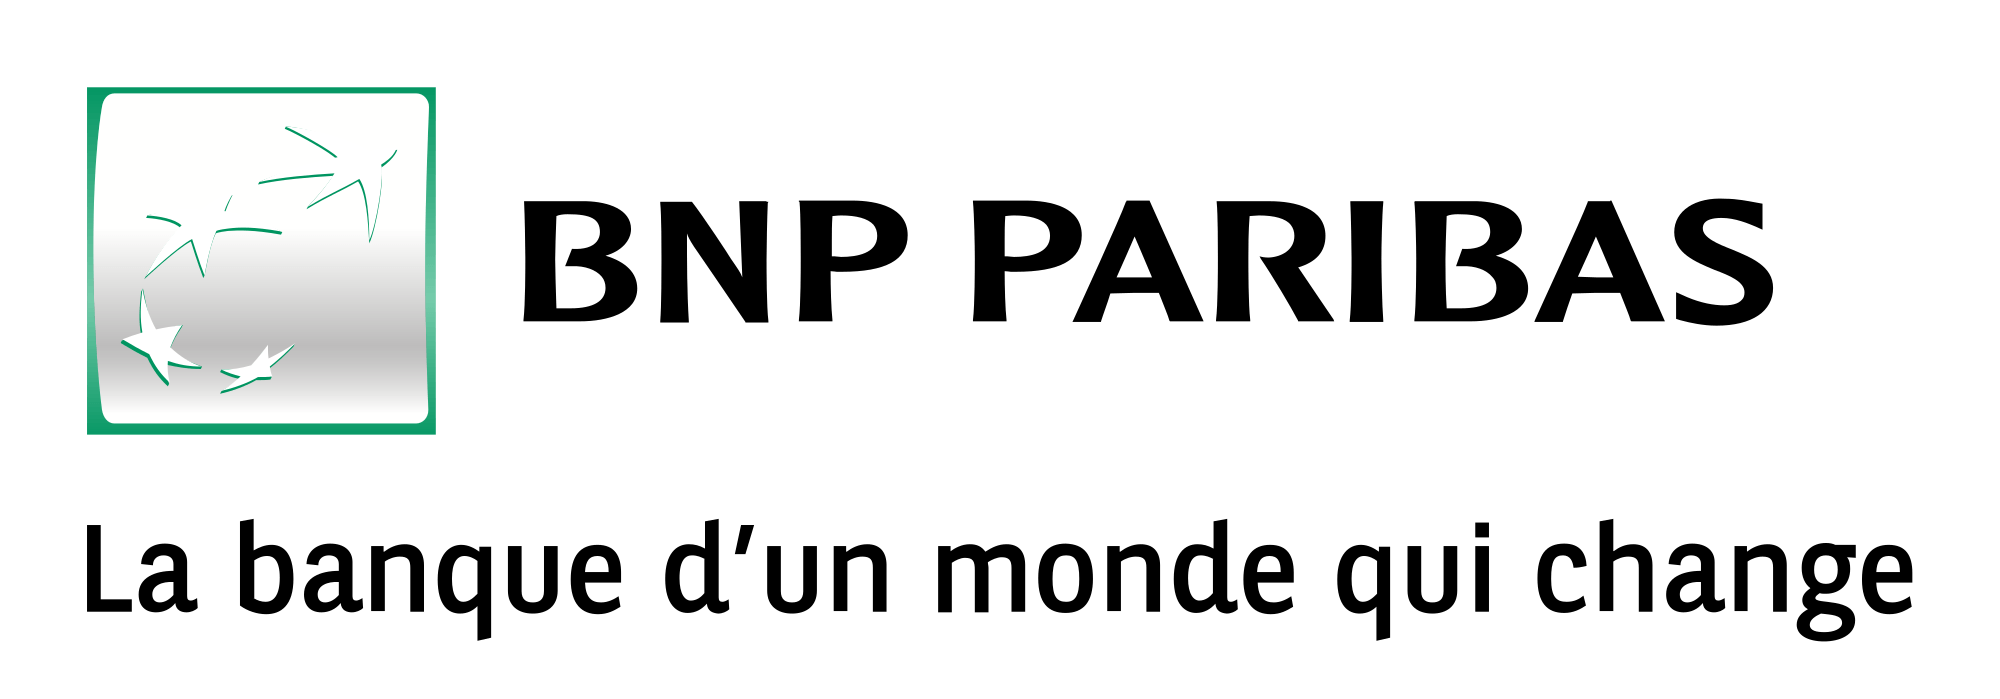 BNP Paribas Logo - Logo BNP Paribas 2016.svg